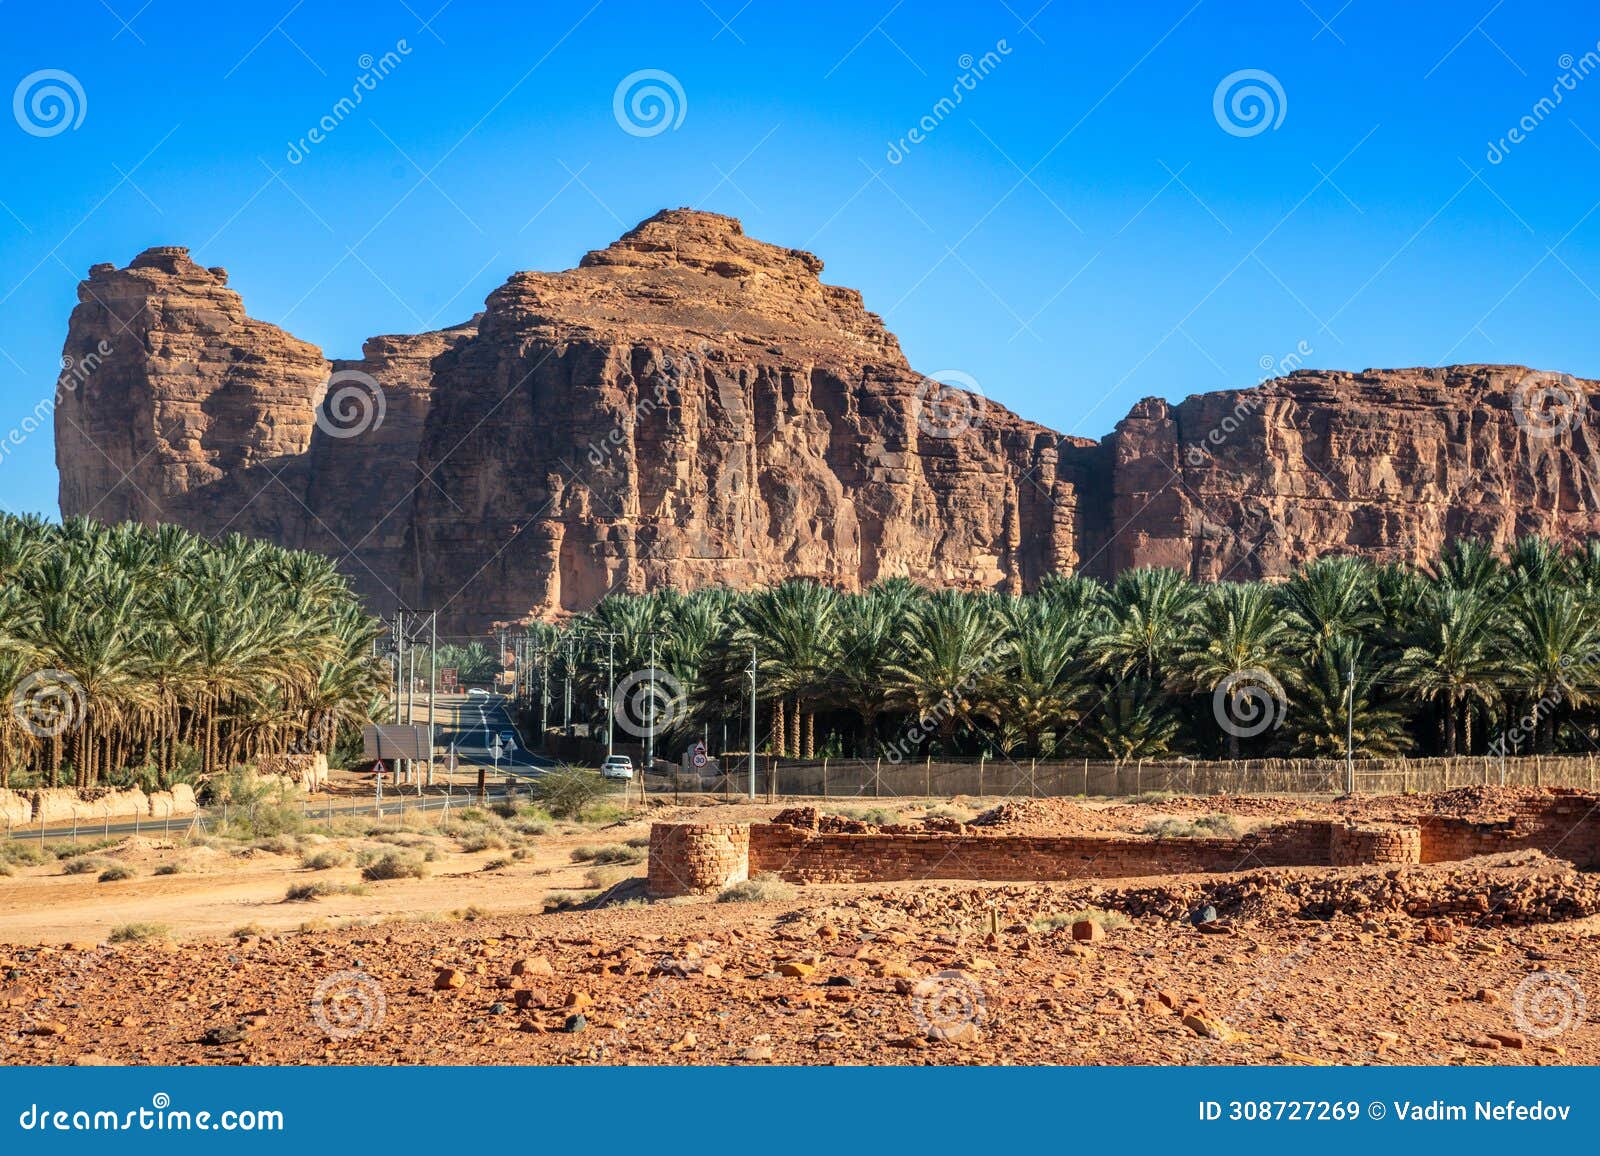 desert mountains with ruins of dadan and road with palms, al ula, madain salih, saudi arabia